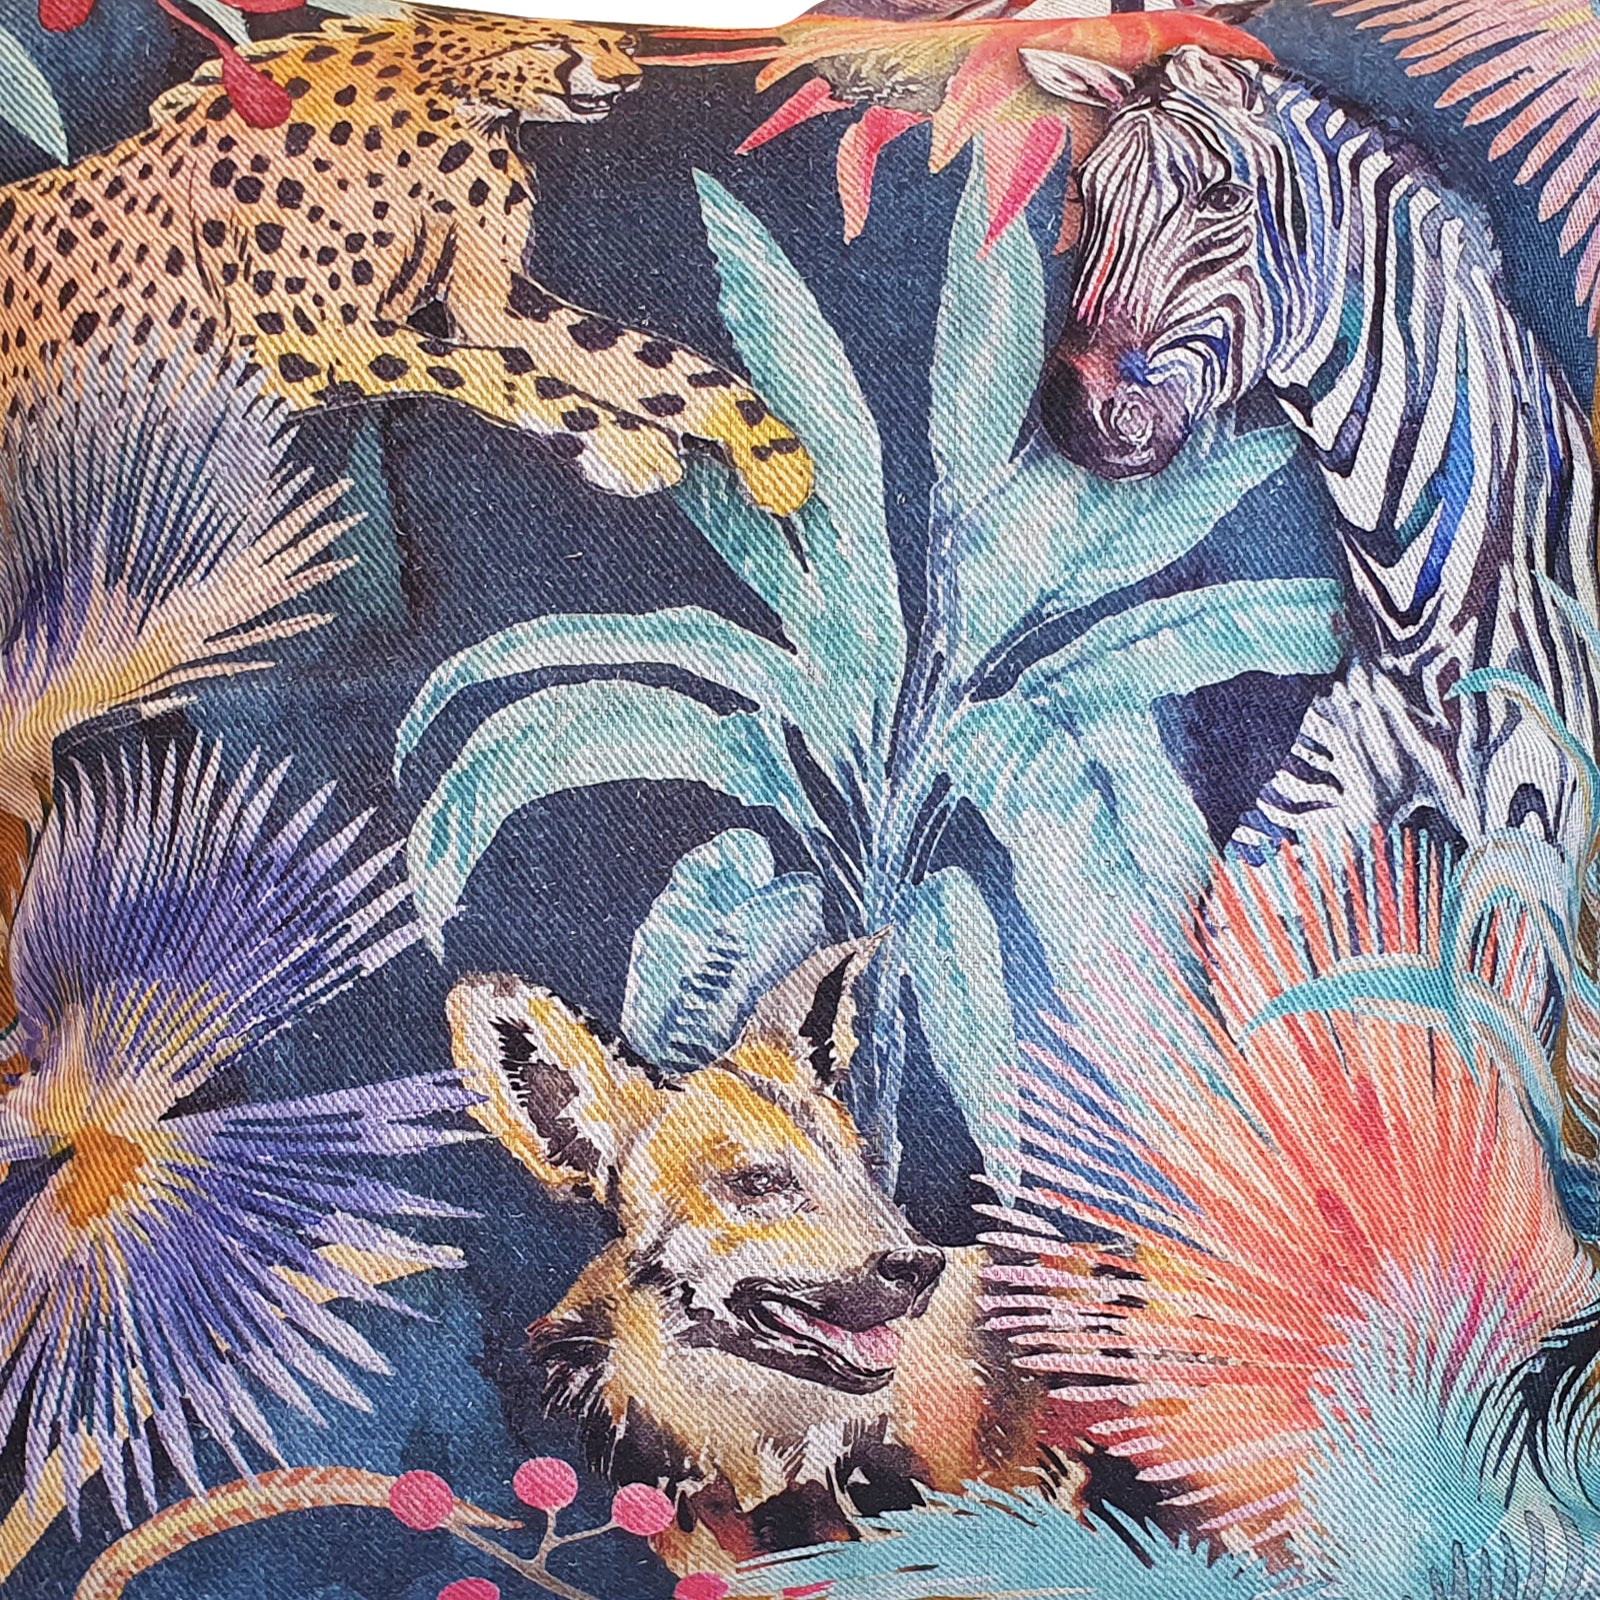 Wildlife with Cheetah Cushion Cover, Standard, Belgian Linen